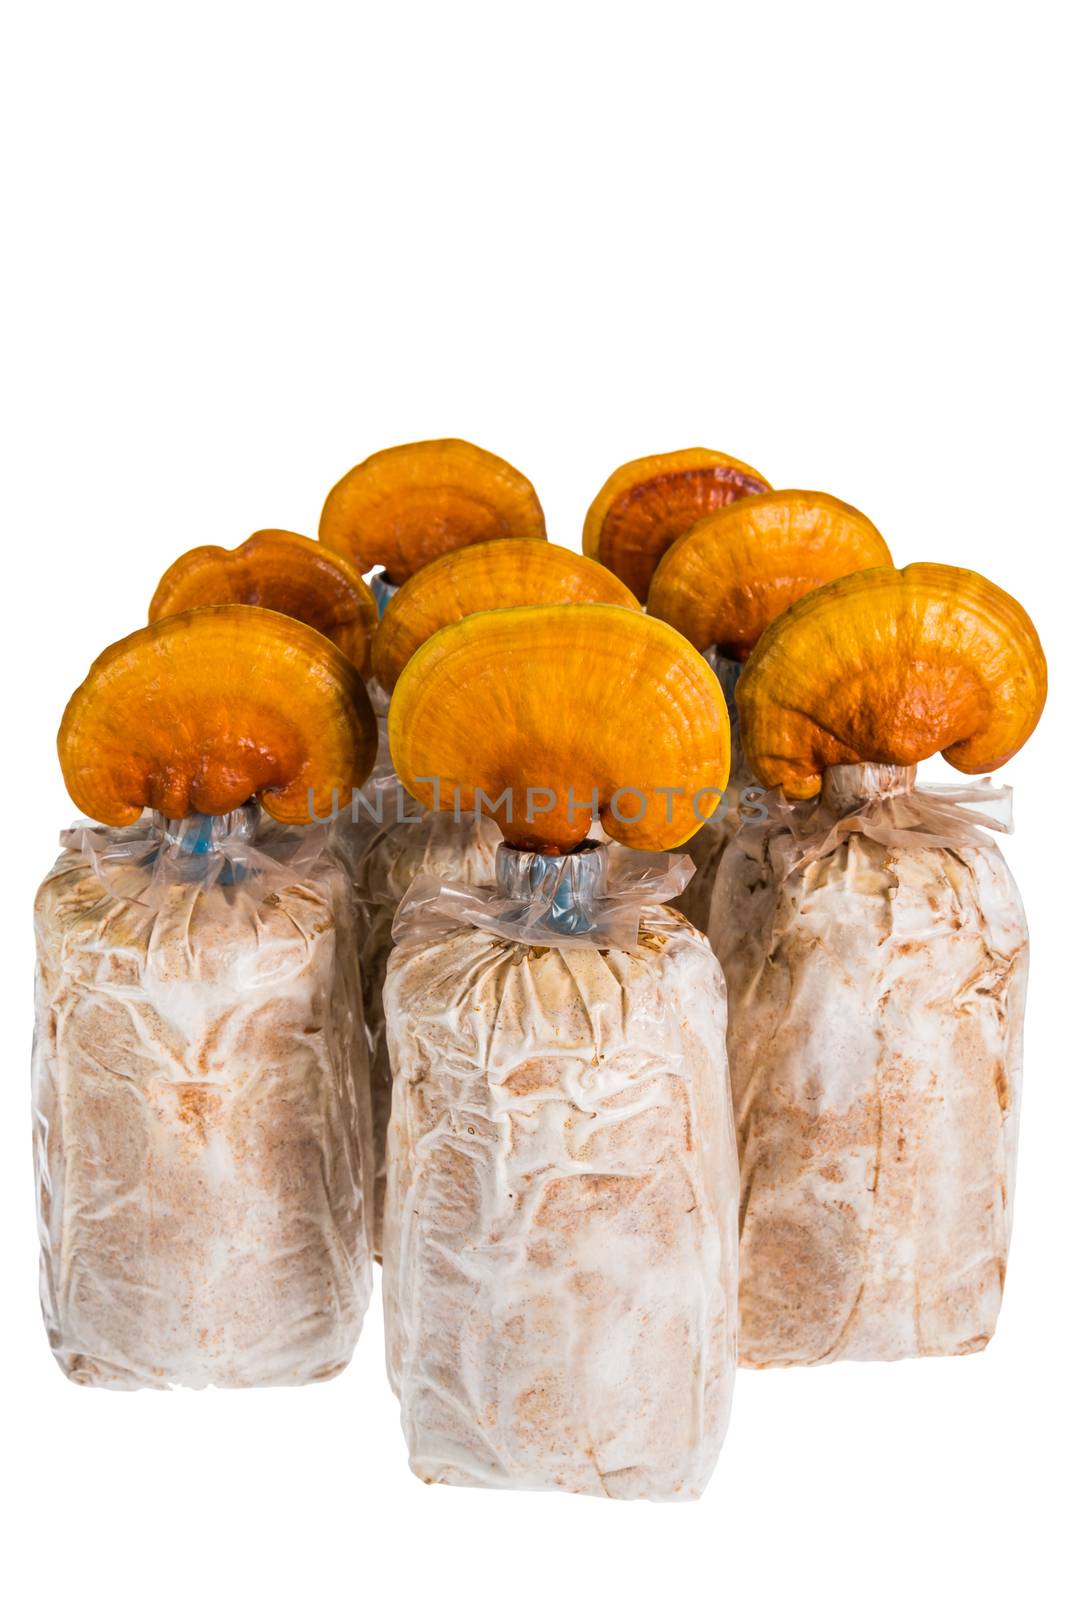 Lingzhi mushroom, Ganoderma lucidum in nursery bag, isolated on white background, Chinese traditional medicine (nutritive value).